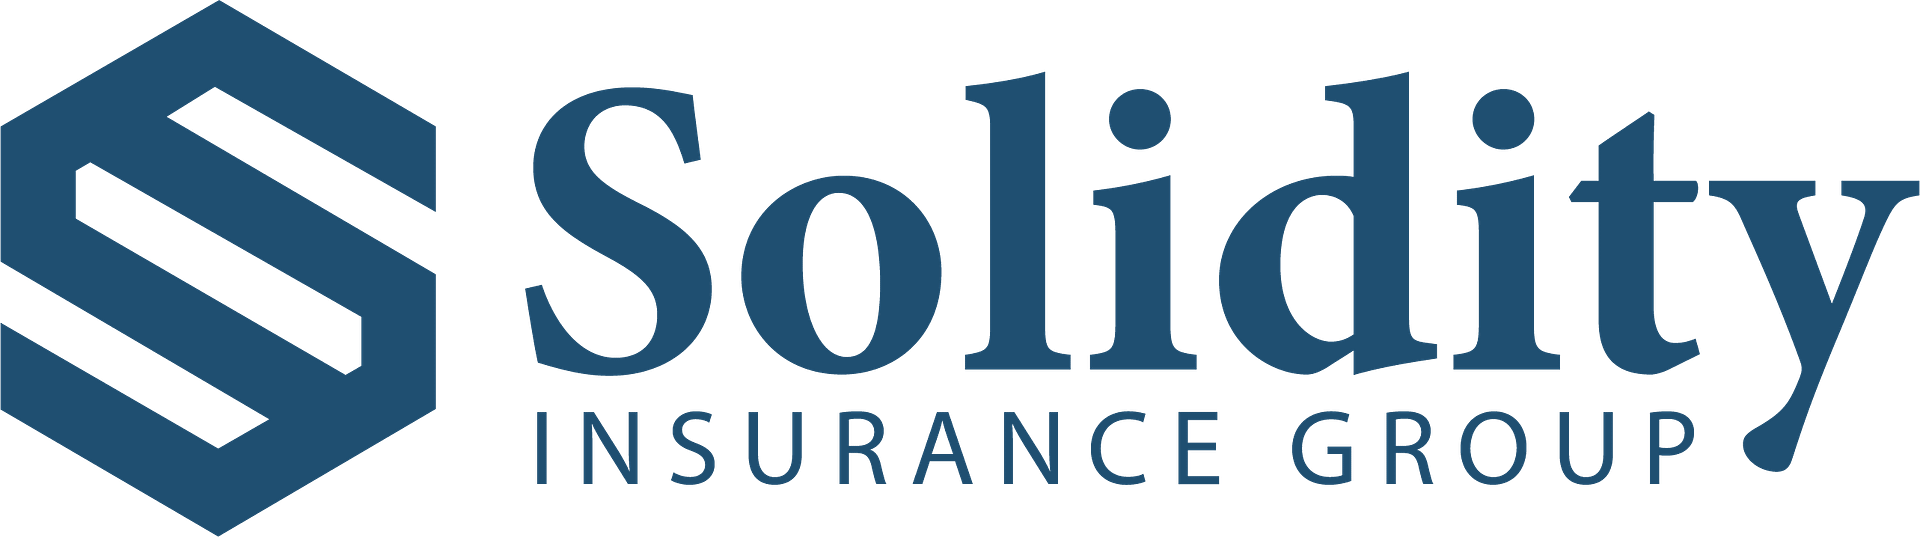 Solidity Insurance Group | Insuring Kalamazoo & Michigan